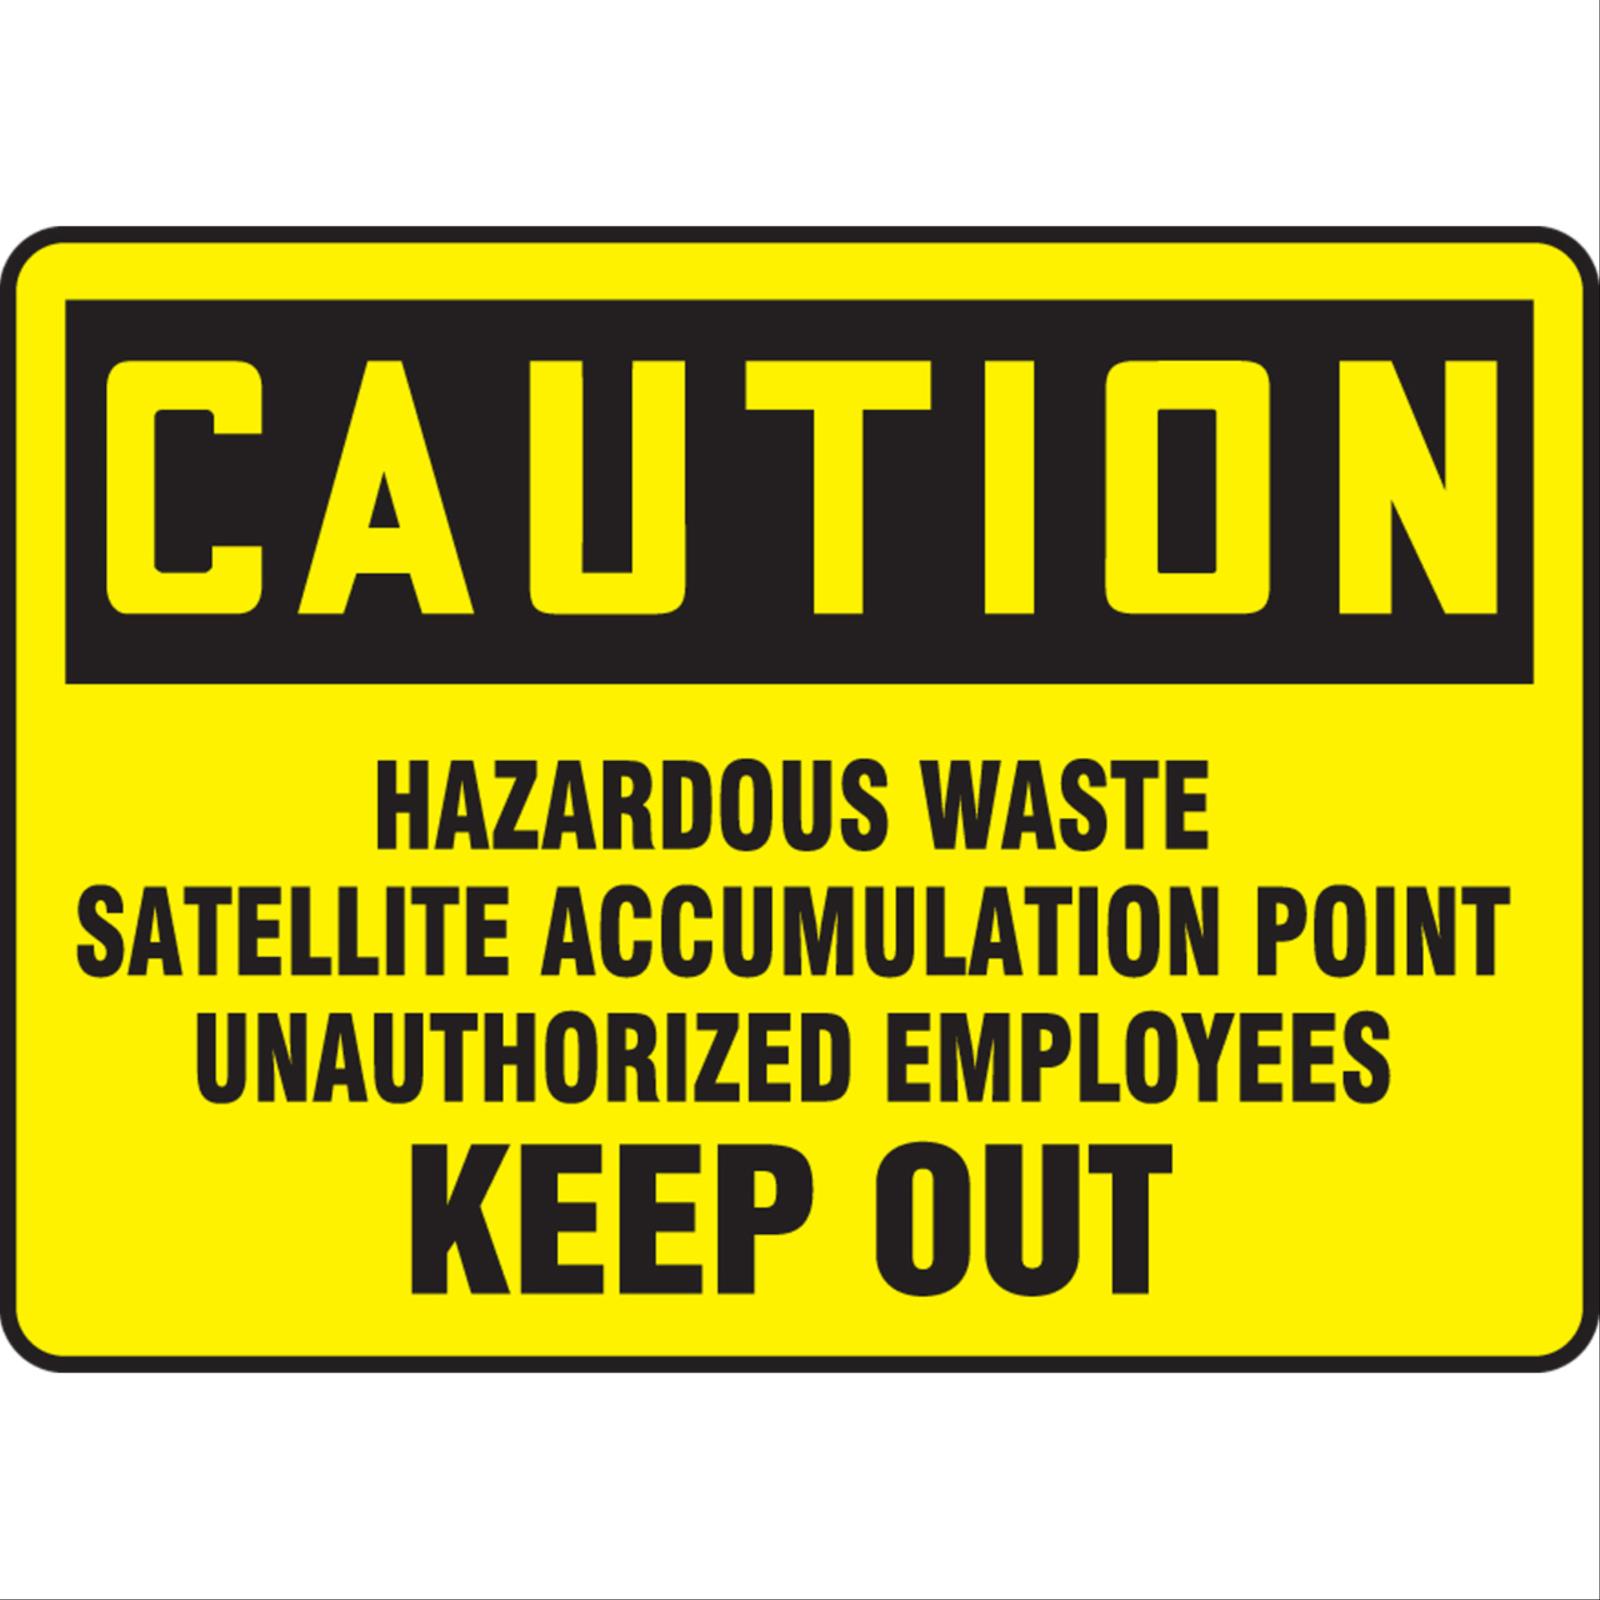 Caution Hazardous Waste Satellite Accumulation Point Signs, COVID-19